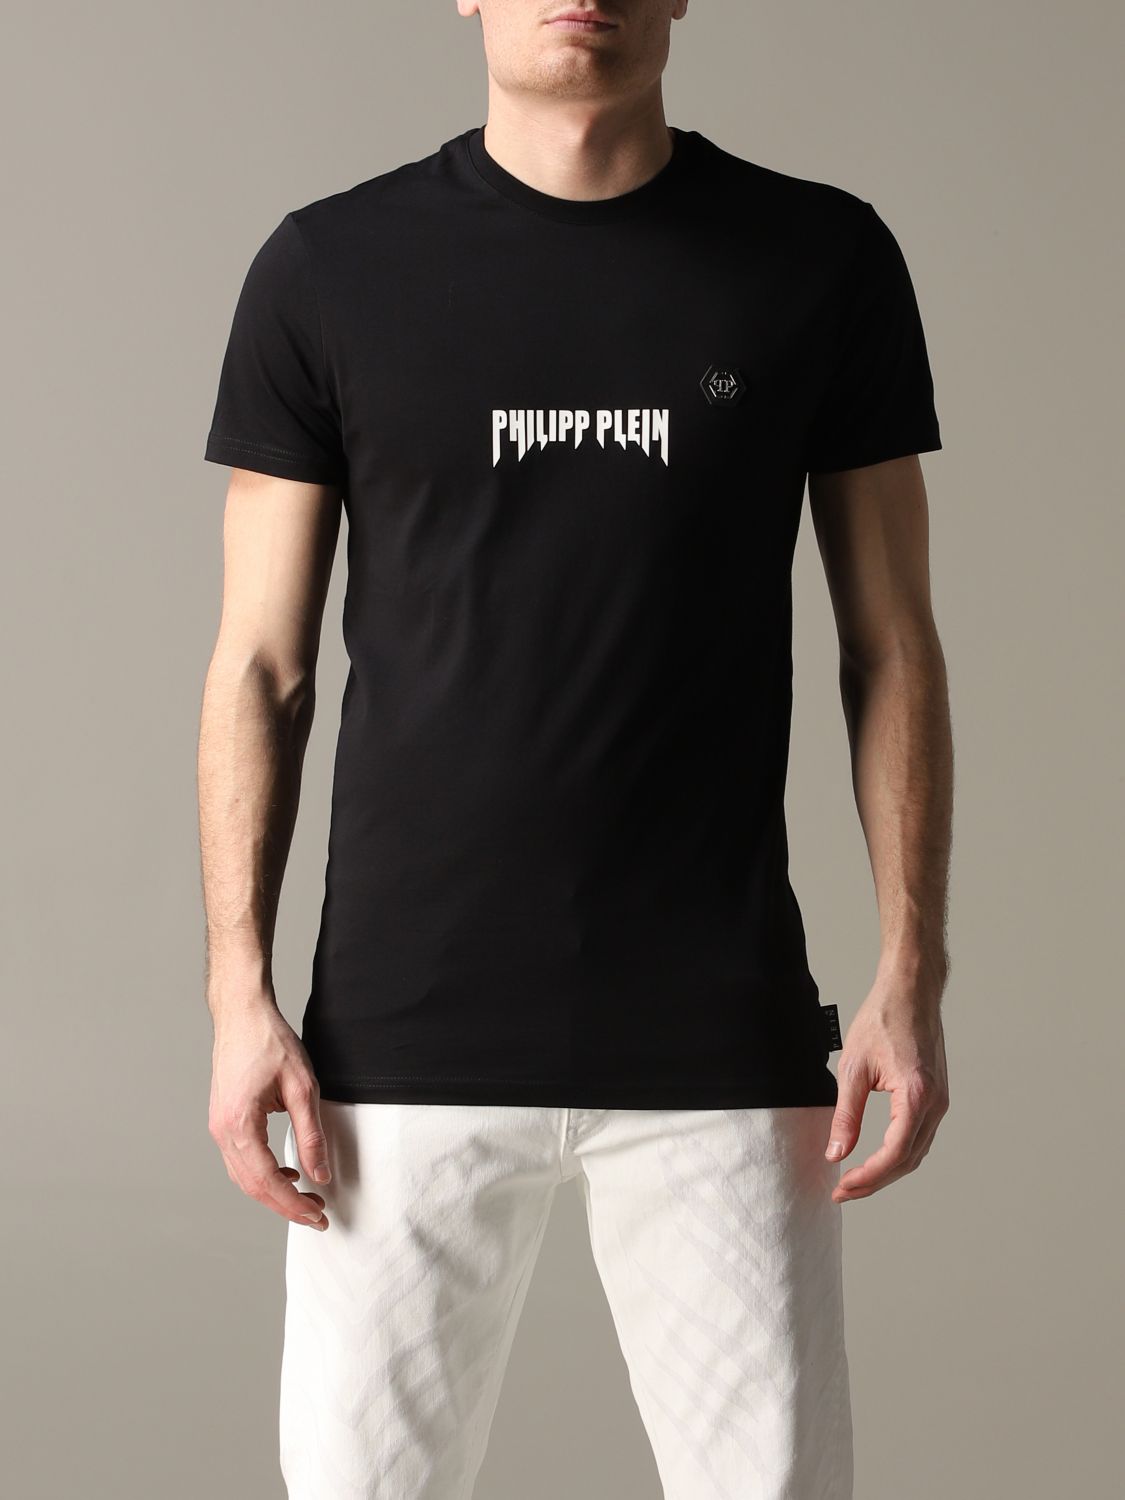 philipp plein black t shirt